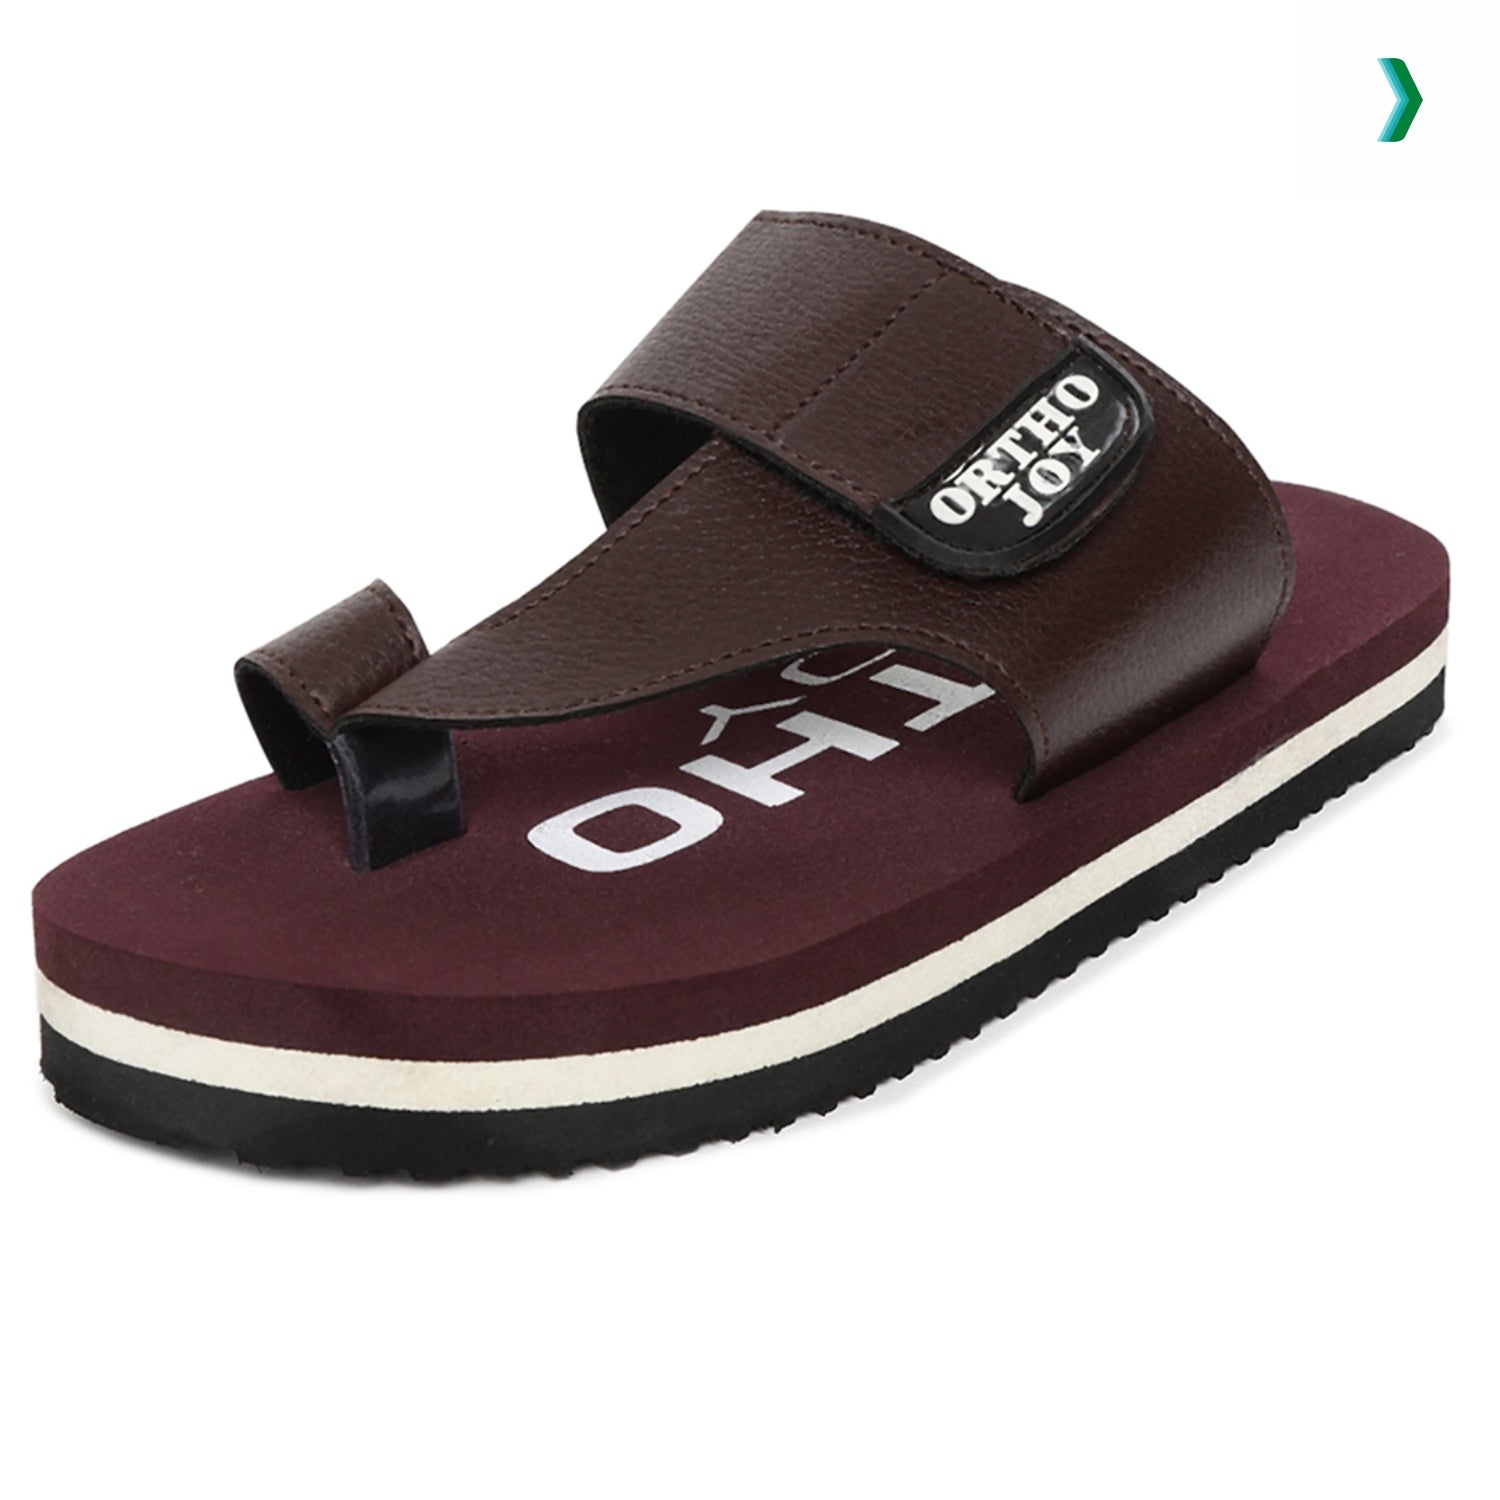 soft slippers for men, Extra Soft Doctor Ortho Slippers